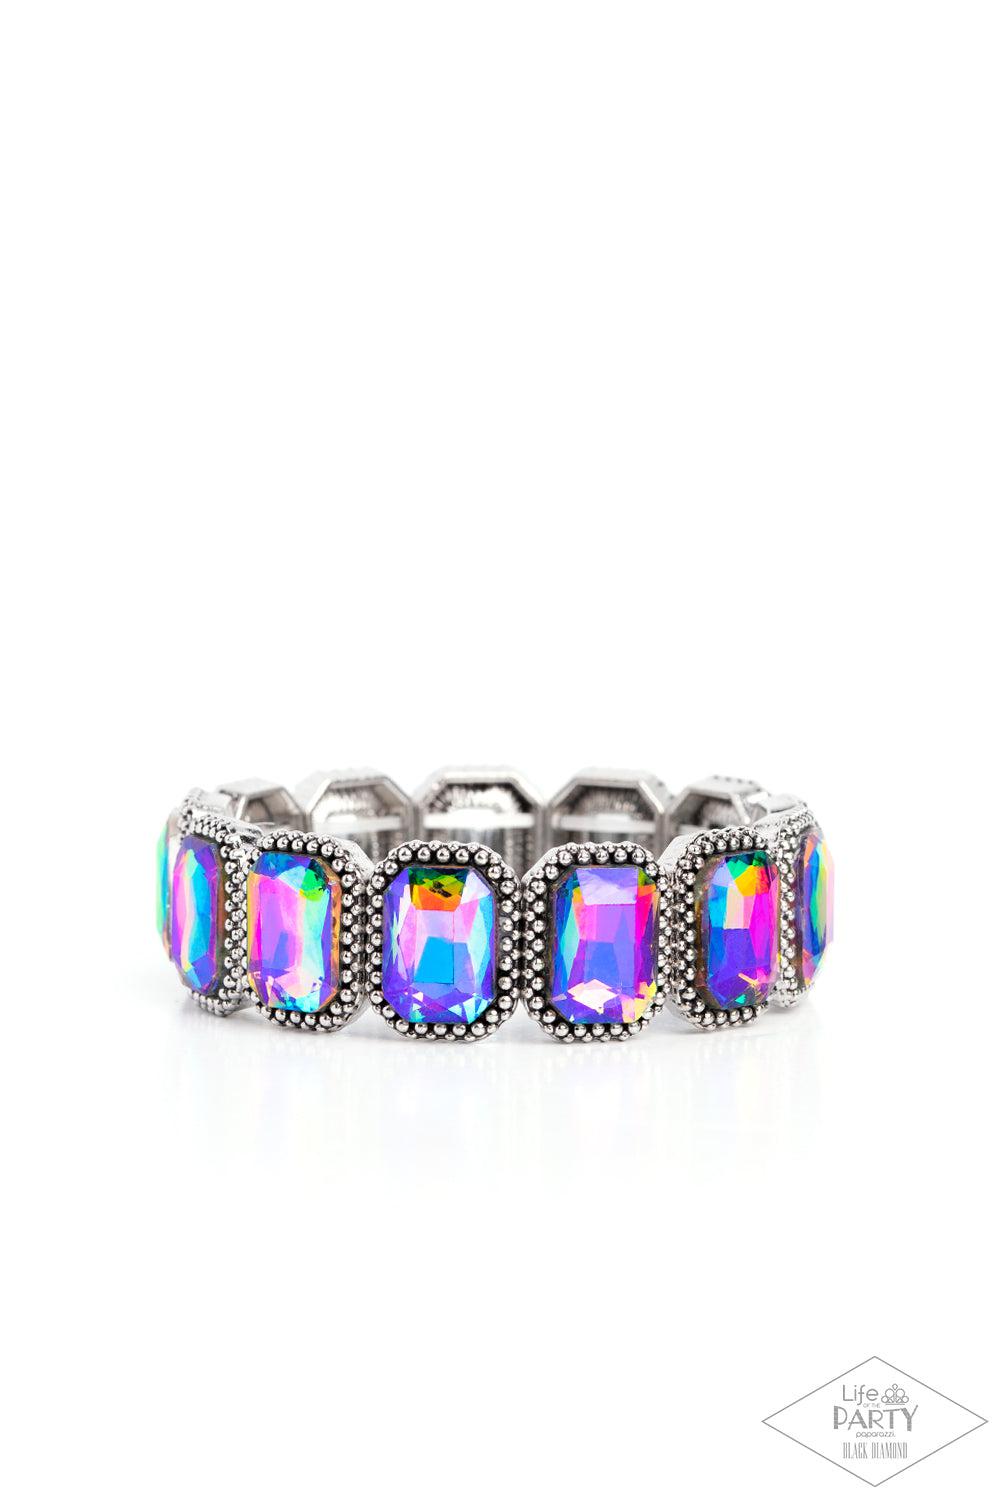 Studded Smolder Multi Oil Spill Bracelet - Paparazzi Accessories- lightbox - CarasShop.com - $5 Jewelry by Cara Jewels